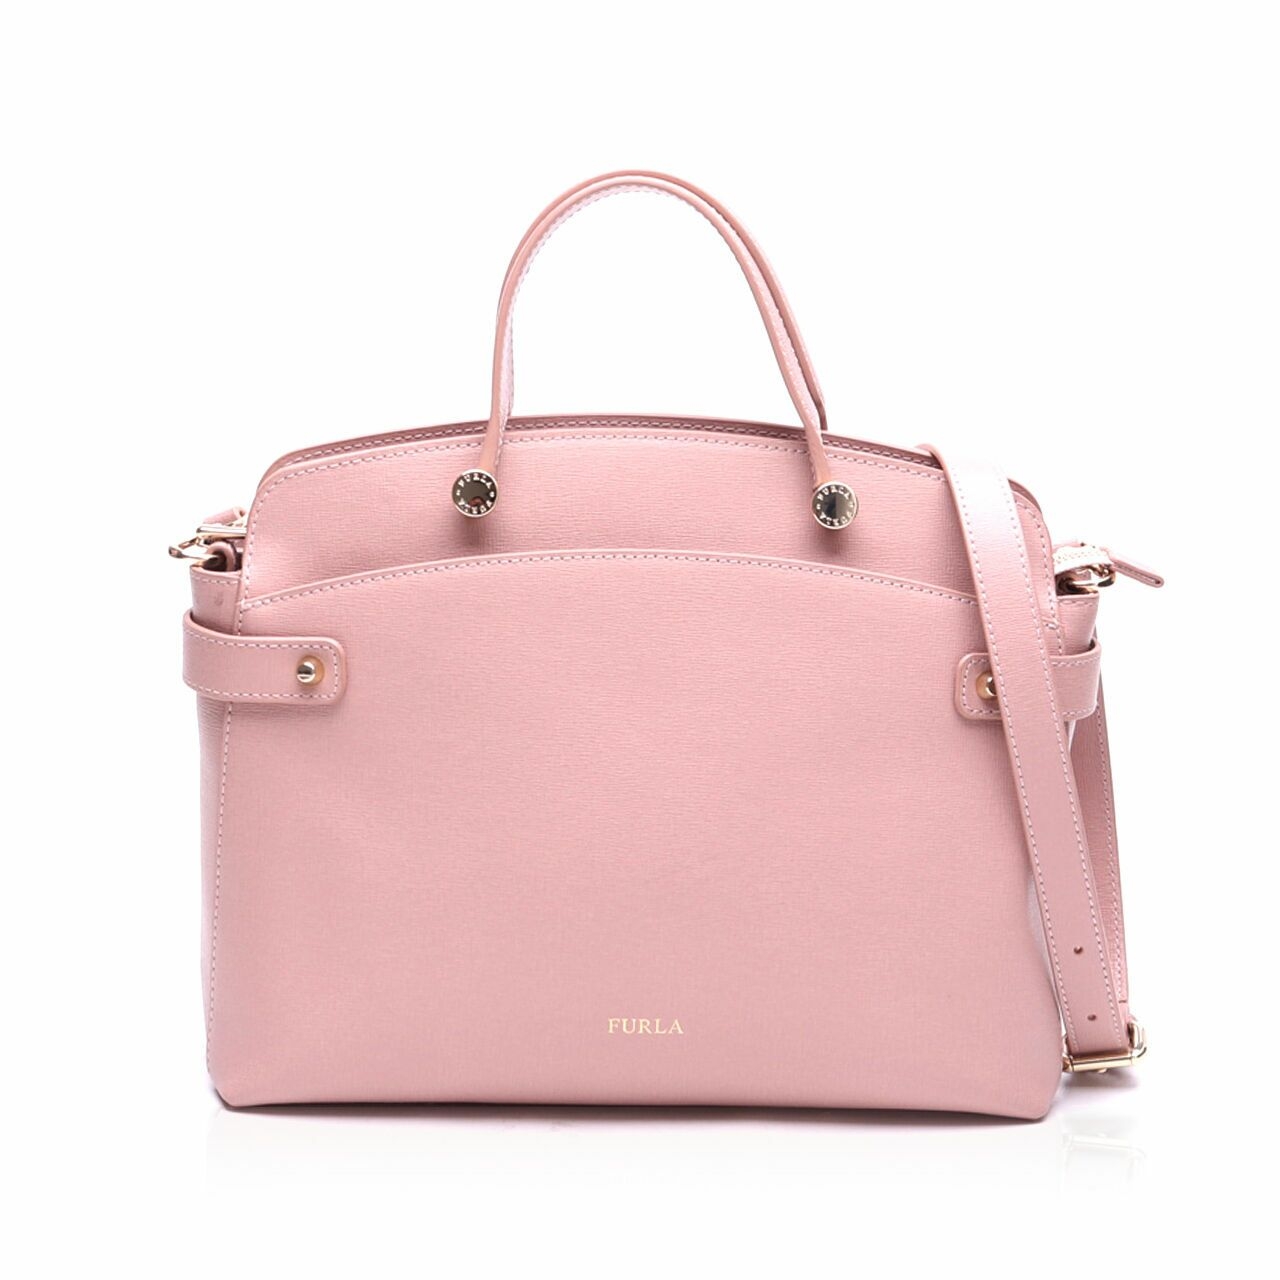 Furla Agata Medium Pink Satchel Bag